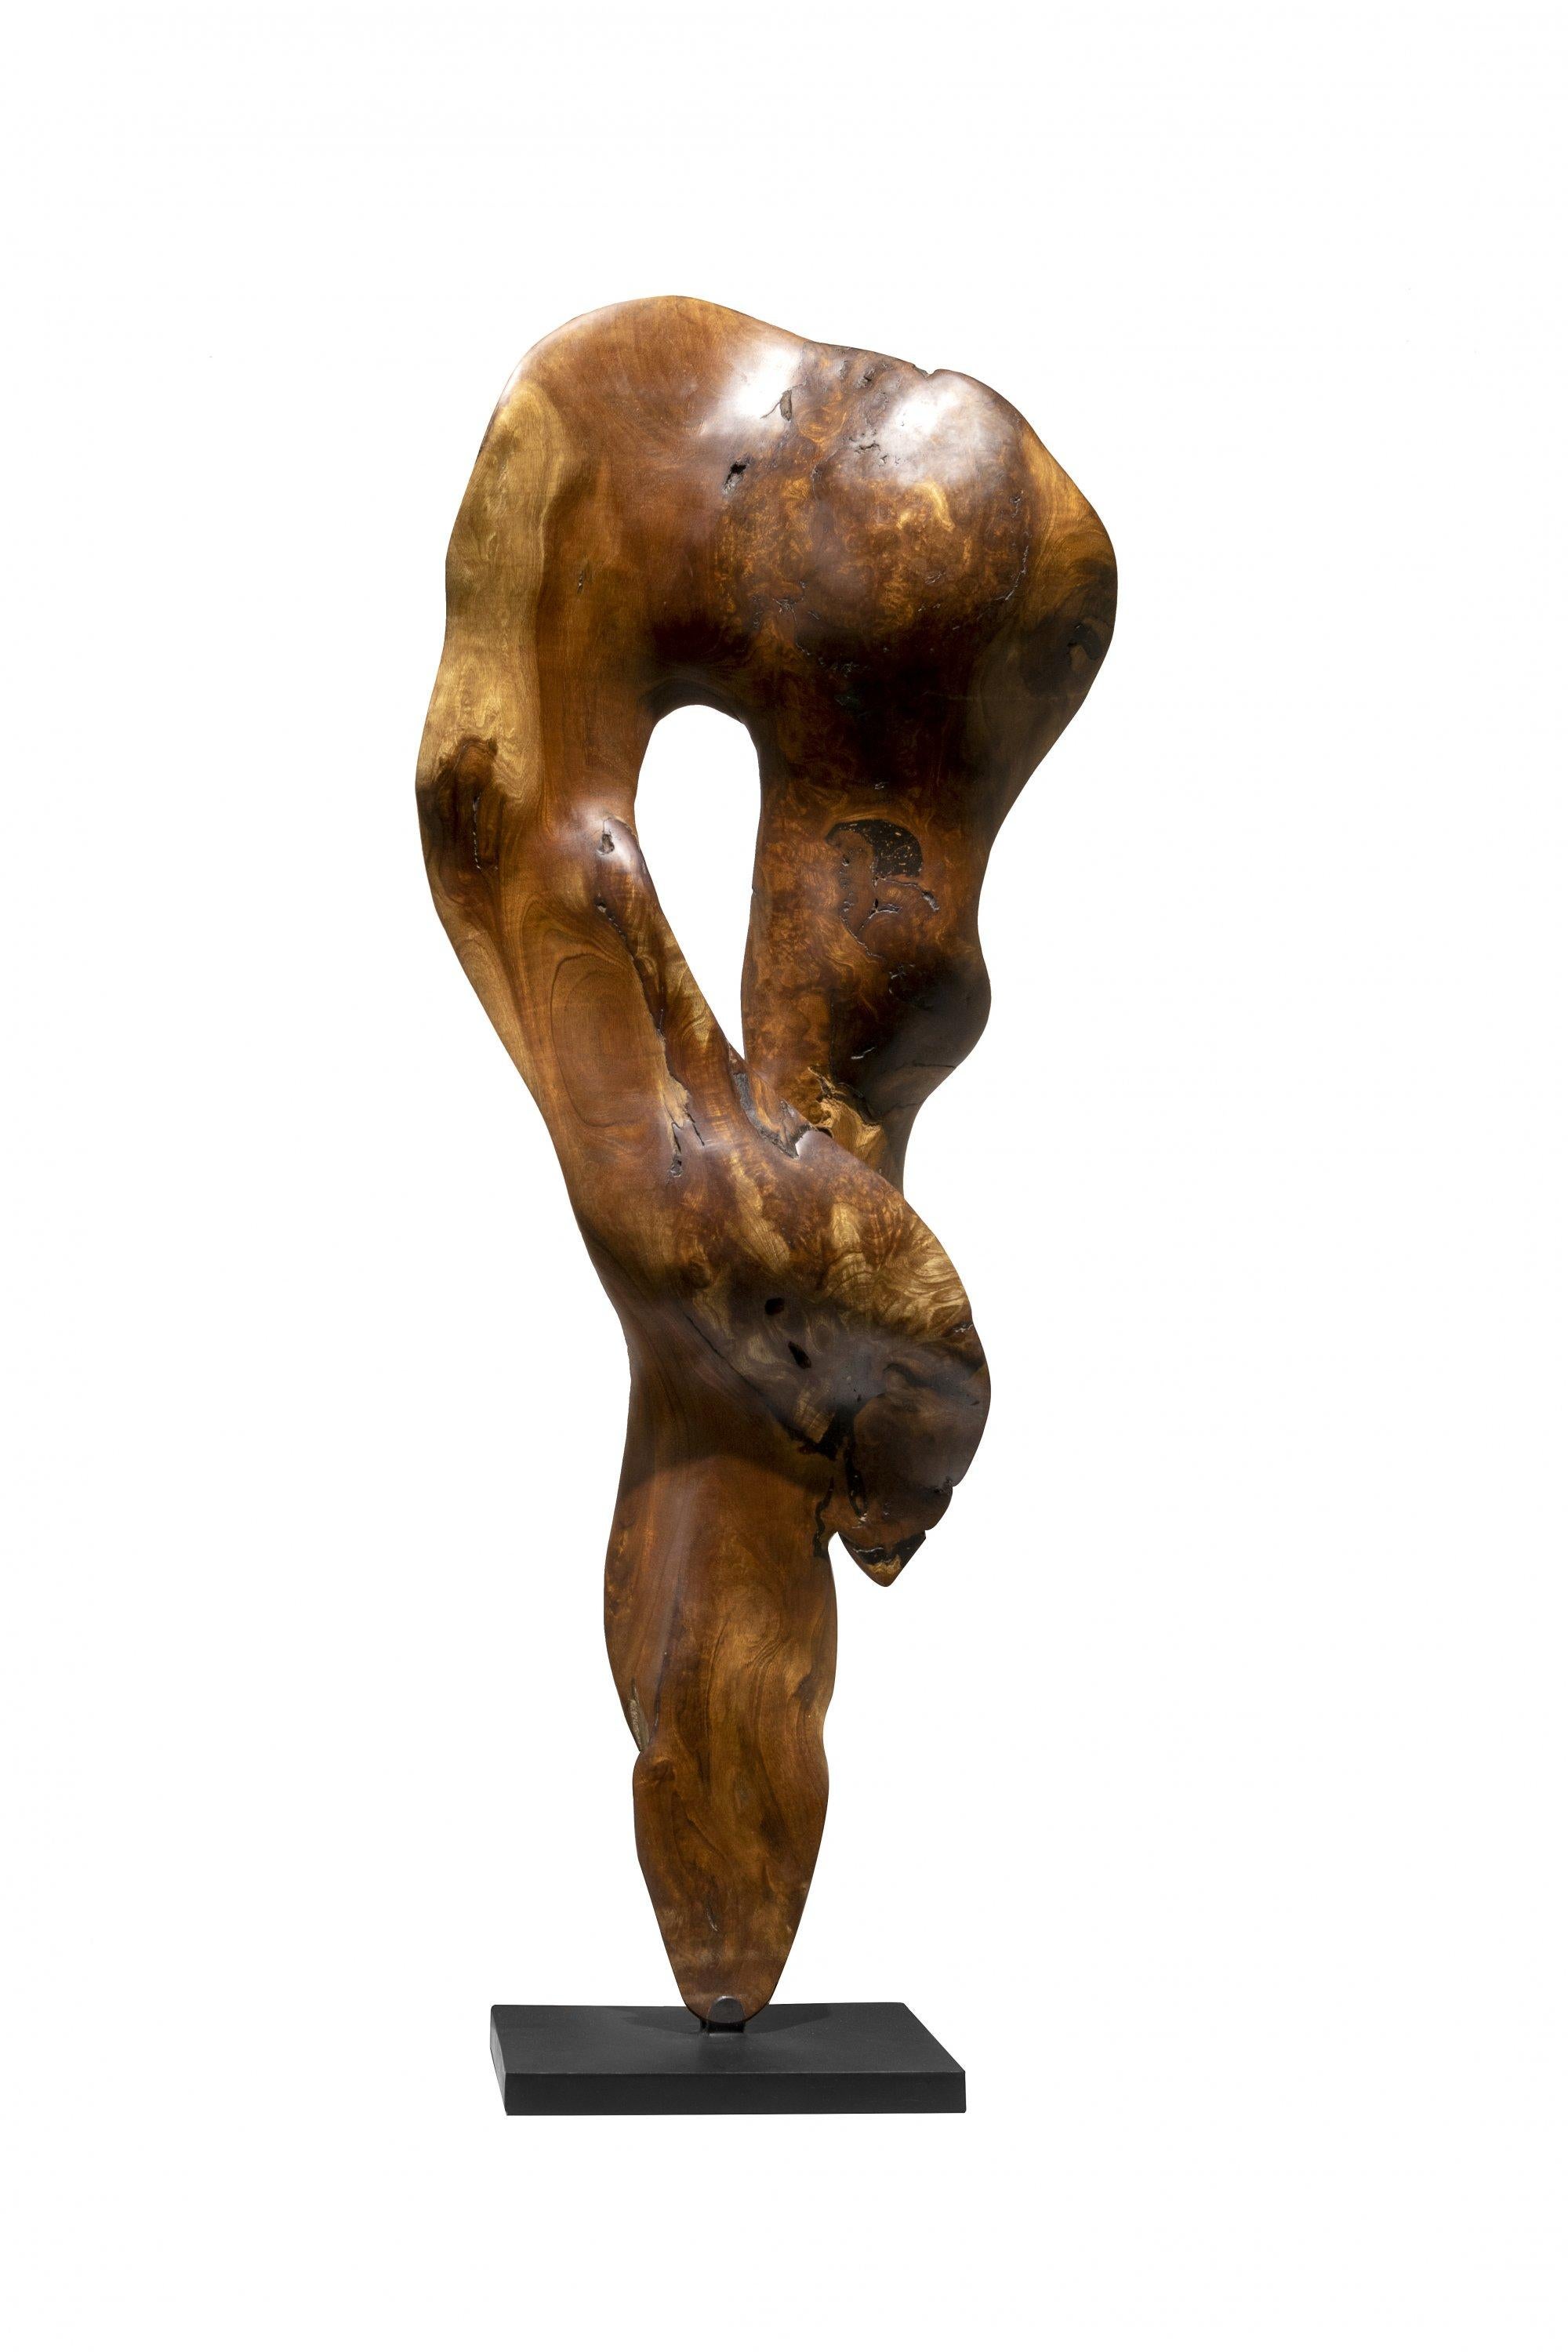 Abstract Sculpture Joaquim Ingravidesa - Vida - 21e siècle, contemporain, sculpture abstraite, racine d'acajou, bois